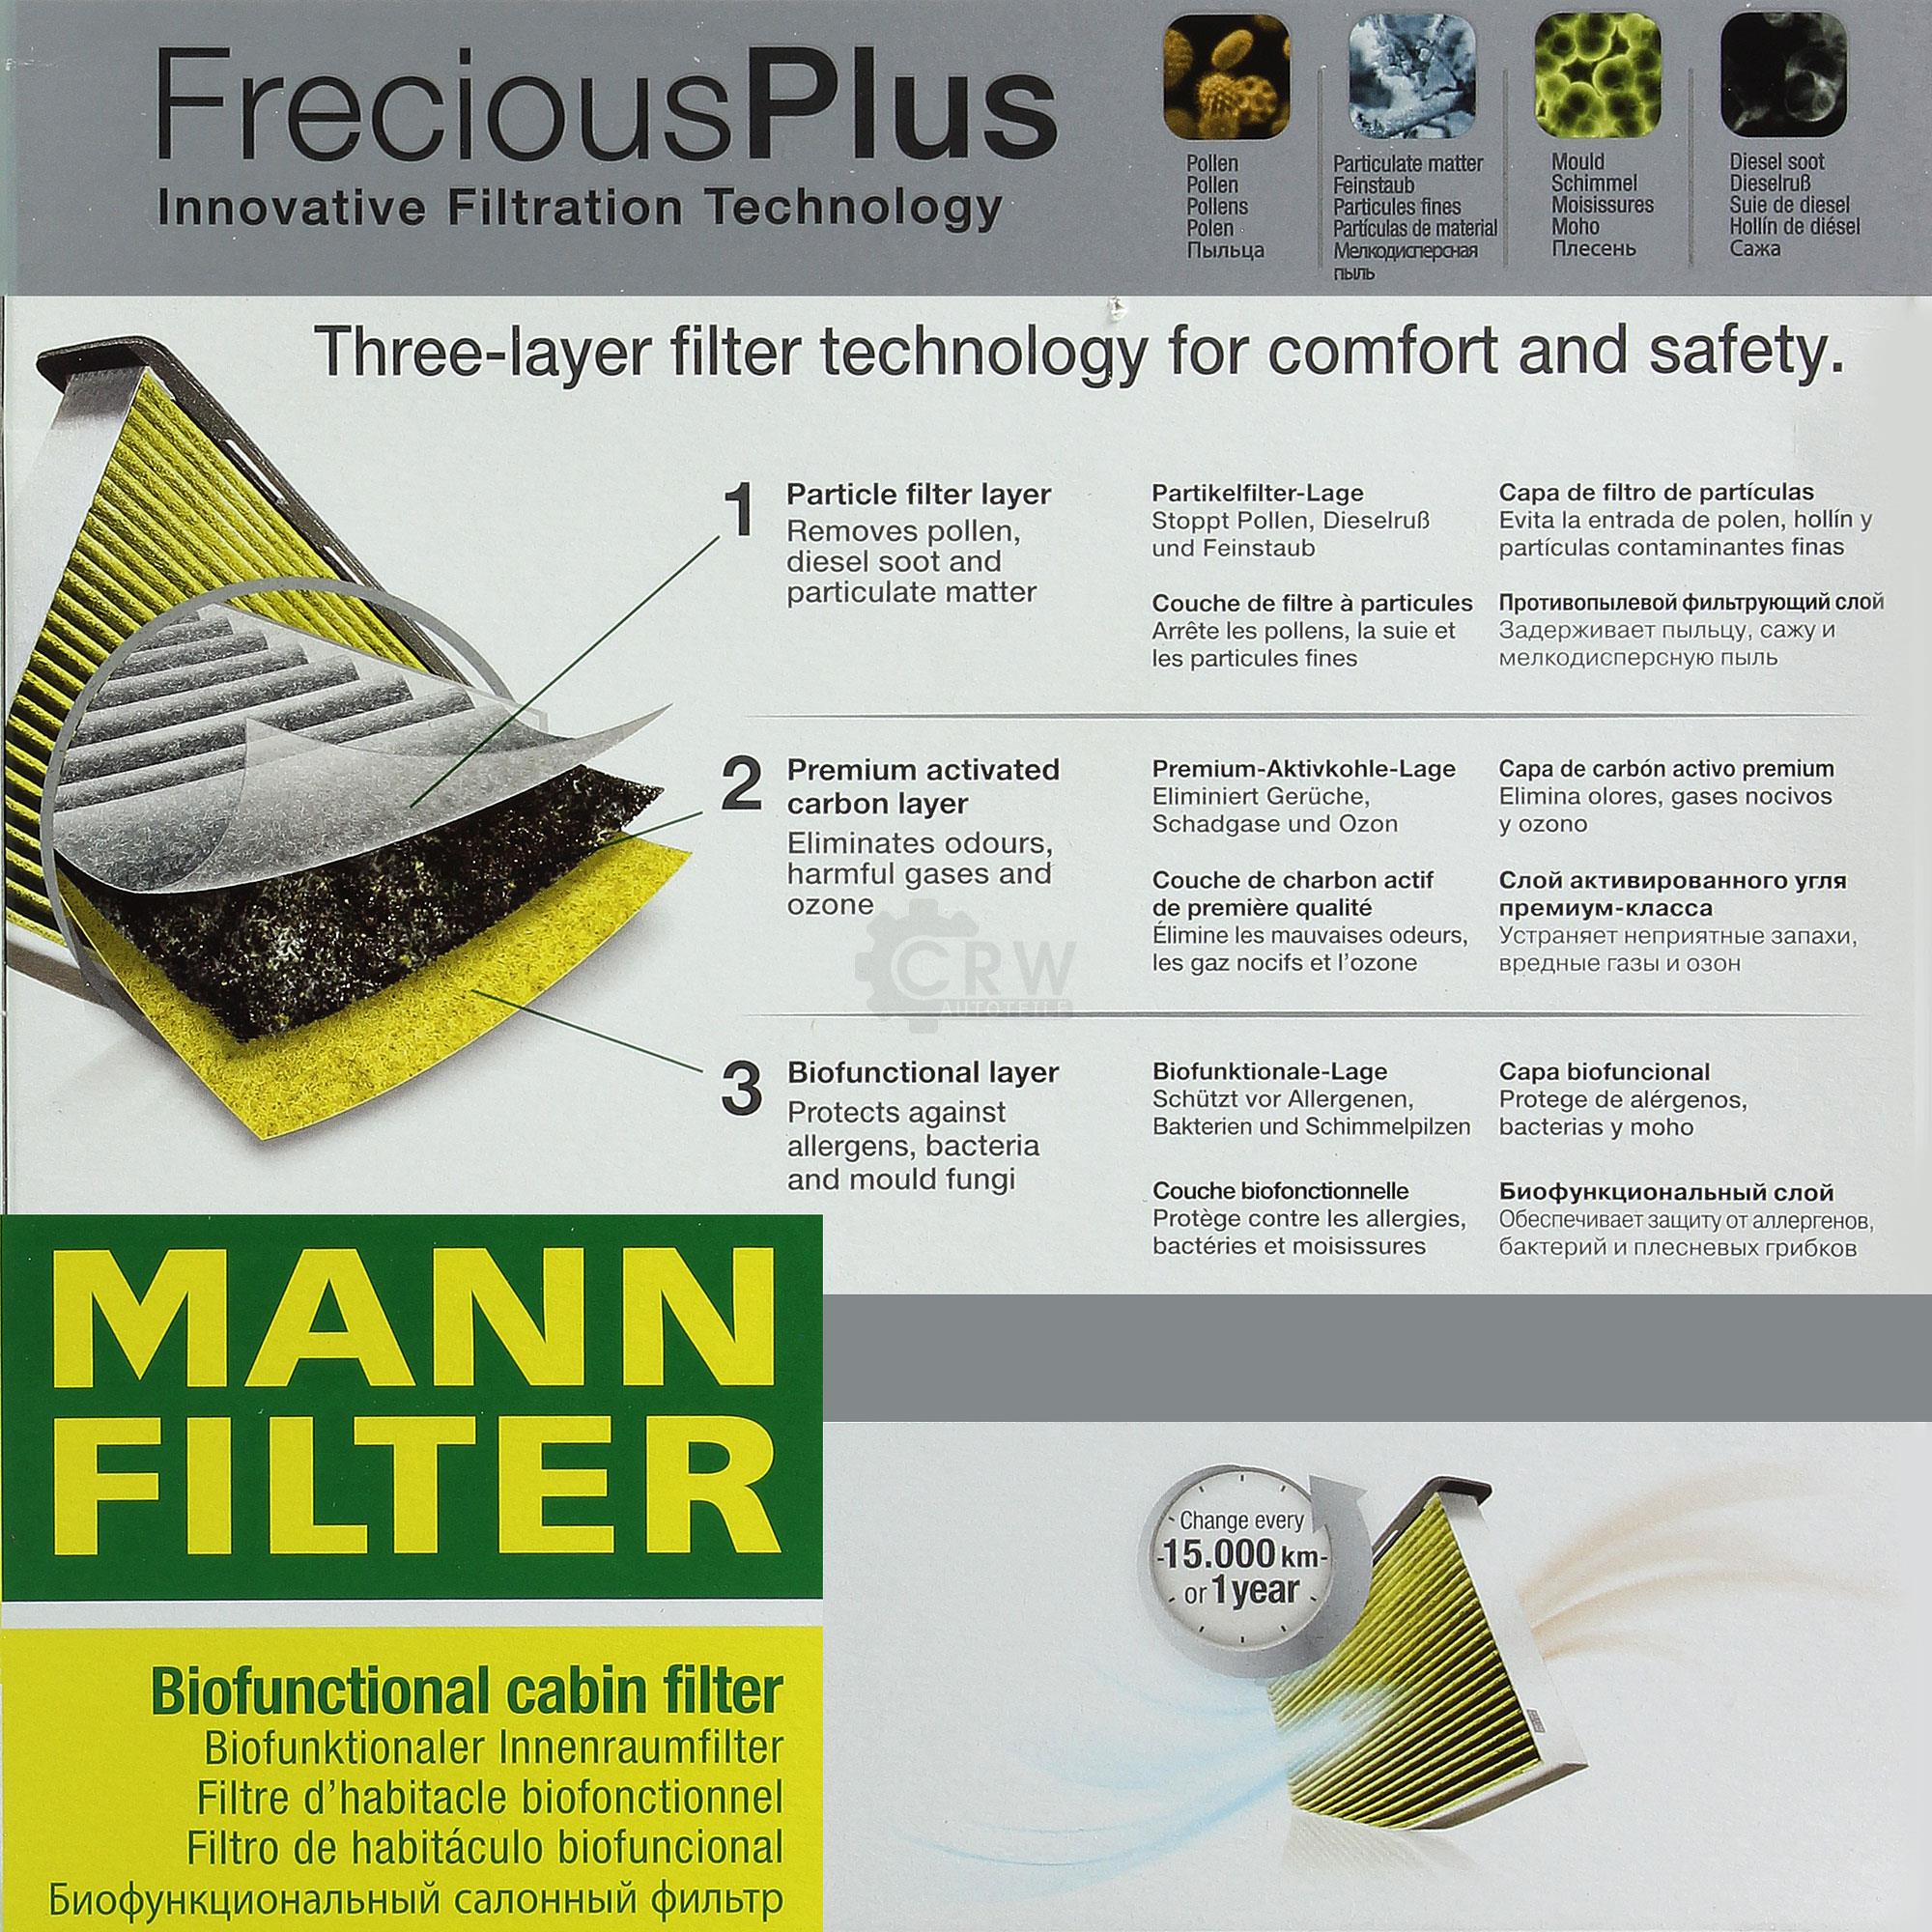 MANN-Filter Innenraumfilter Biofunctional für Allergiker FP 2131